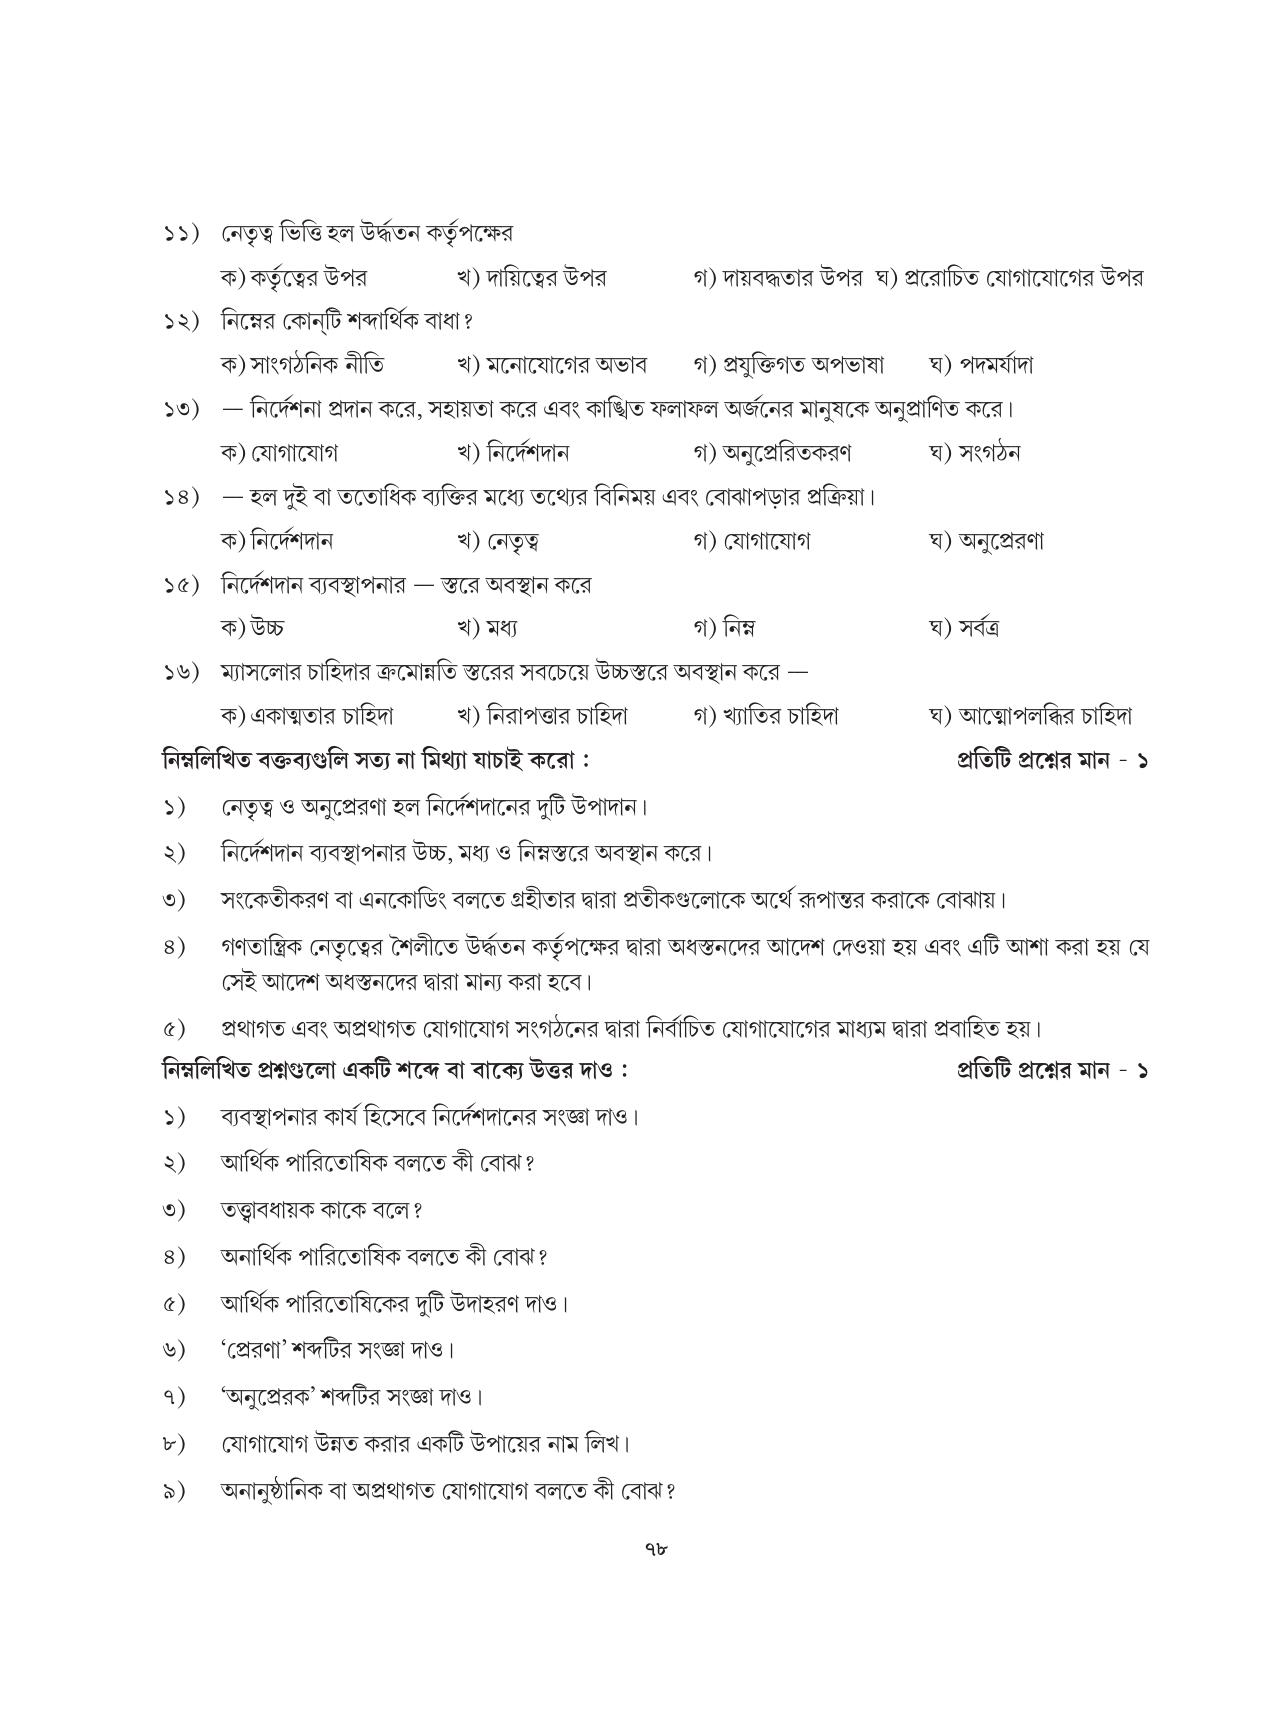 Tripura Board Class 12 Karbari Shastra Bengali Version Workbooks - Page 78